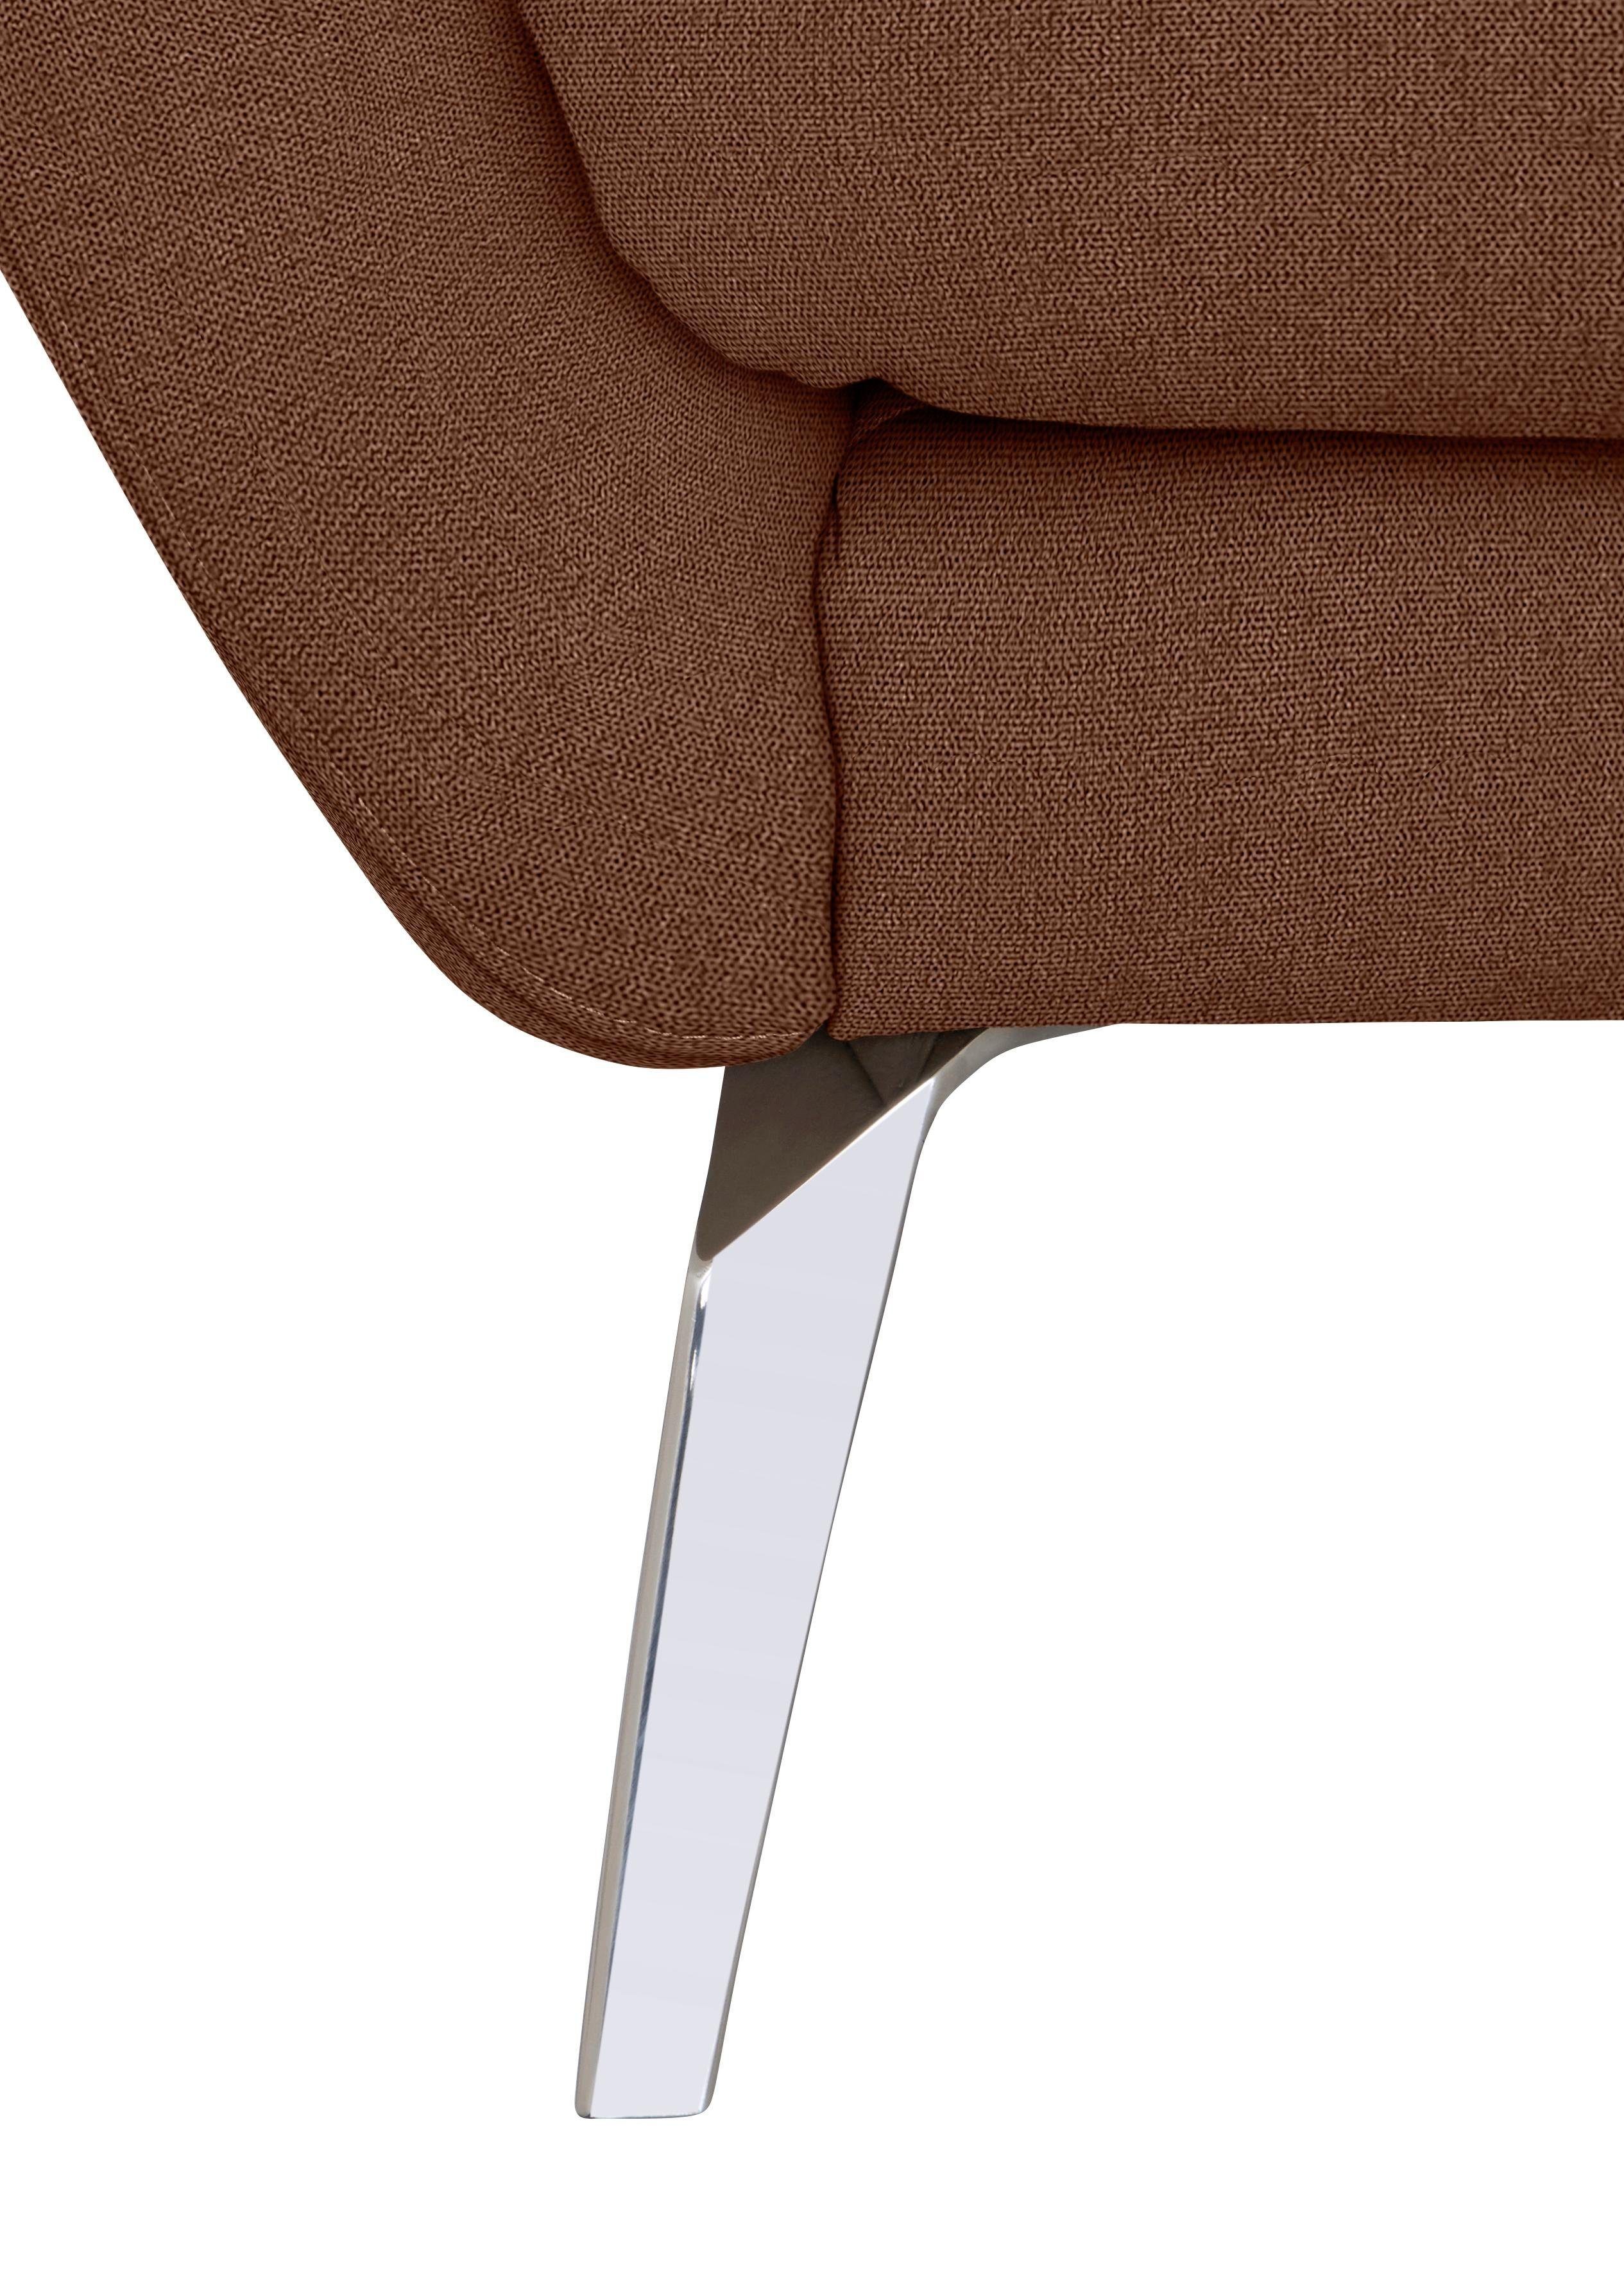 Big-Sofa dekorativer W.SCHILLIG softy, im Chrom Heftung glänzend Füße Sitz, mit